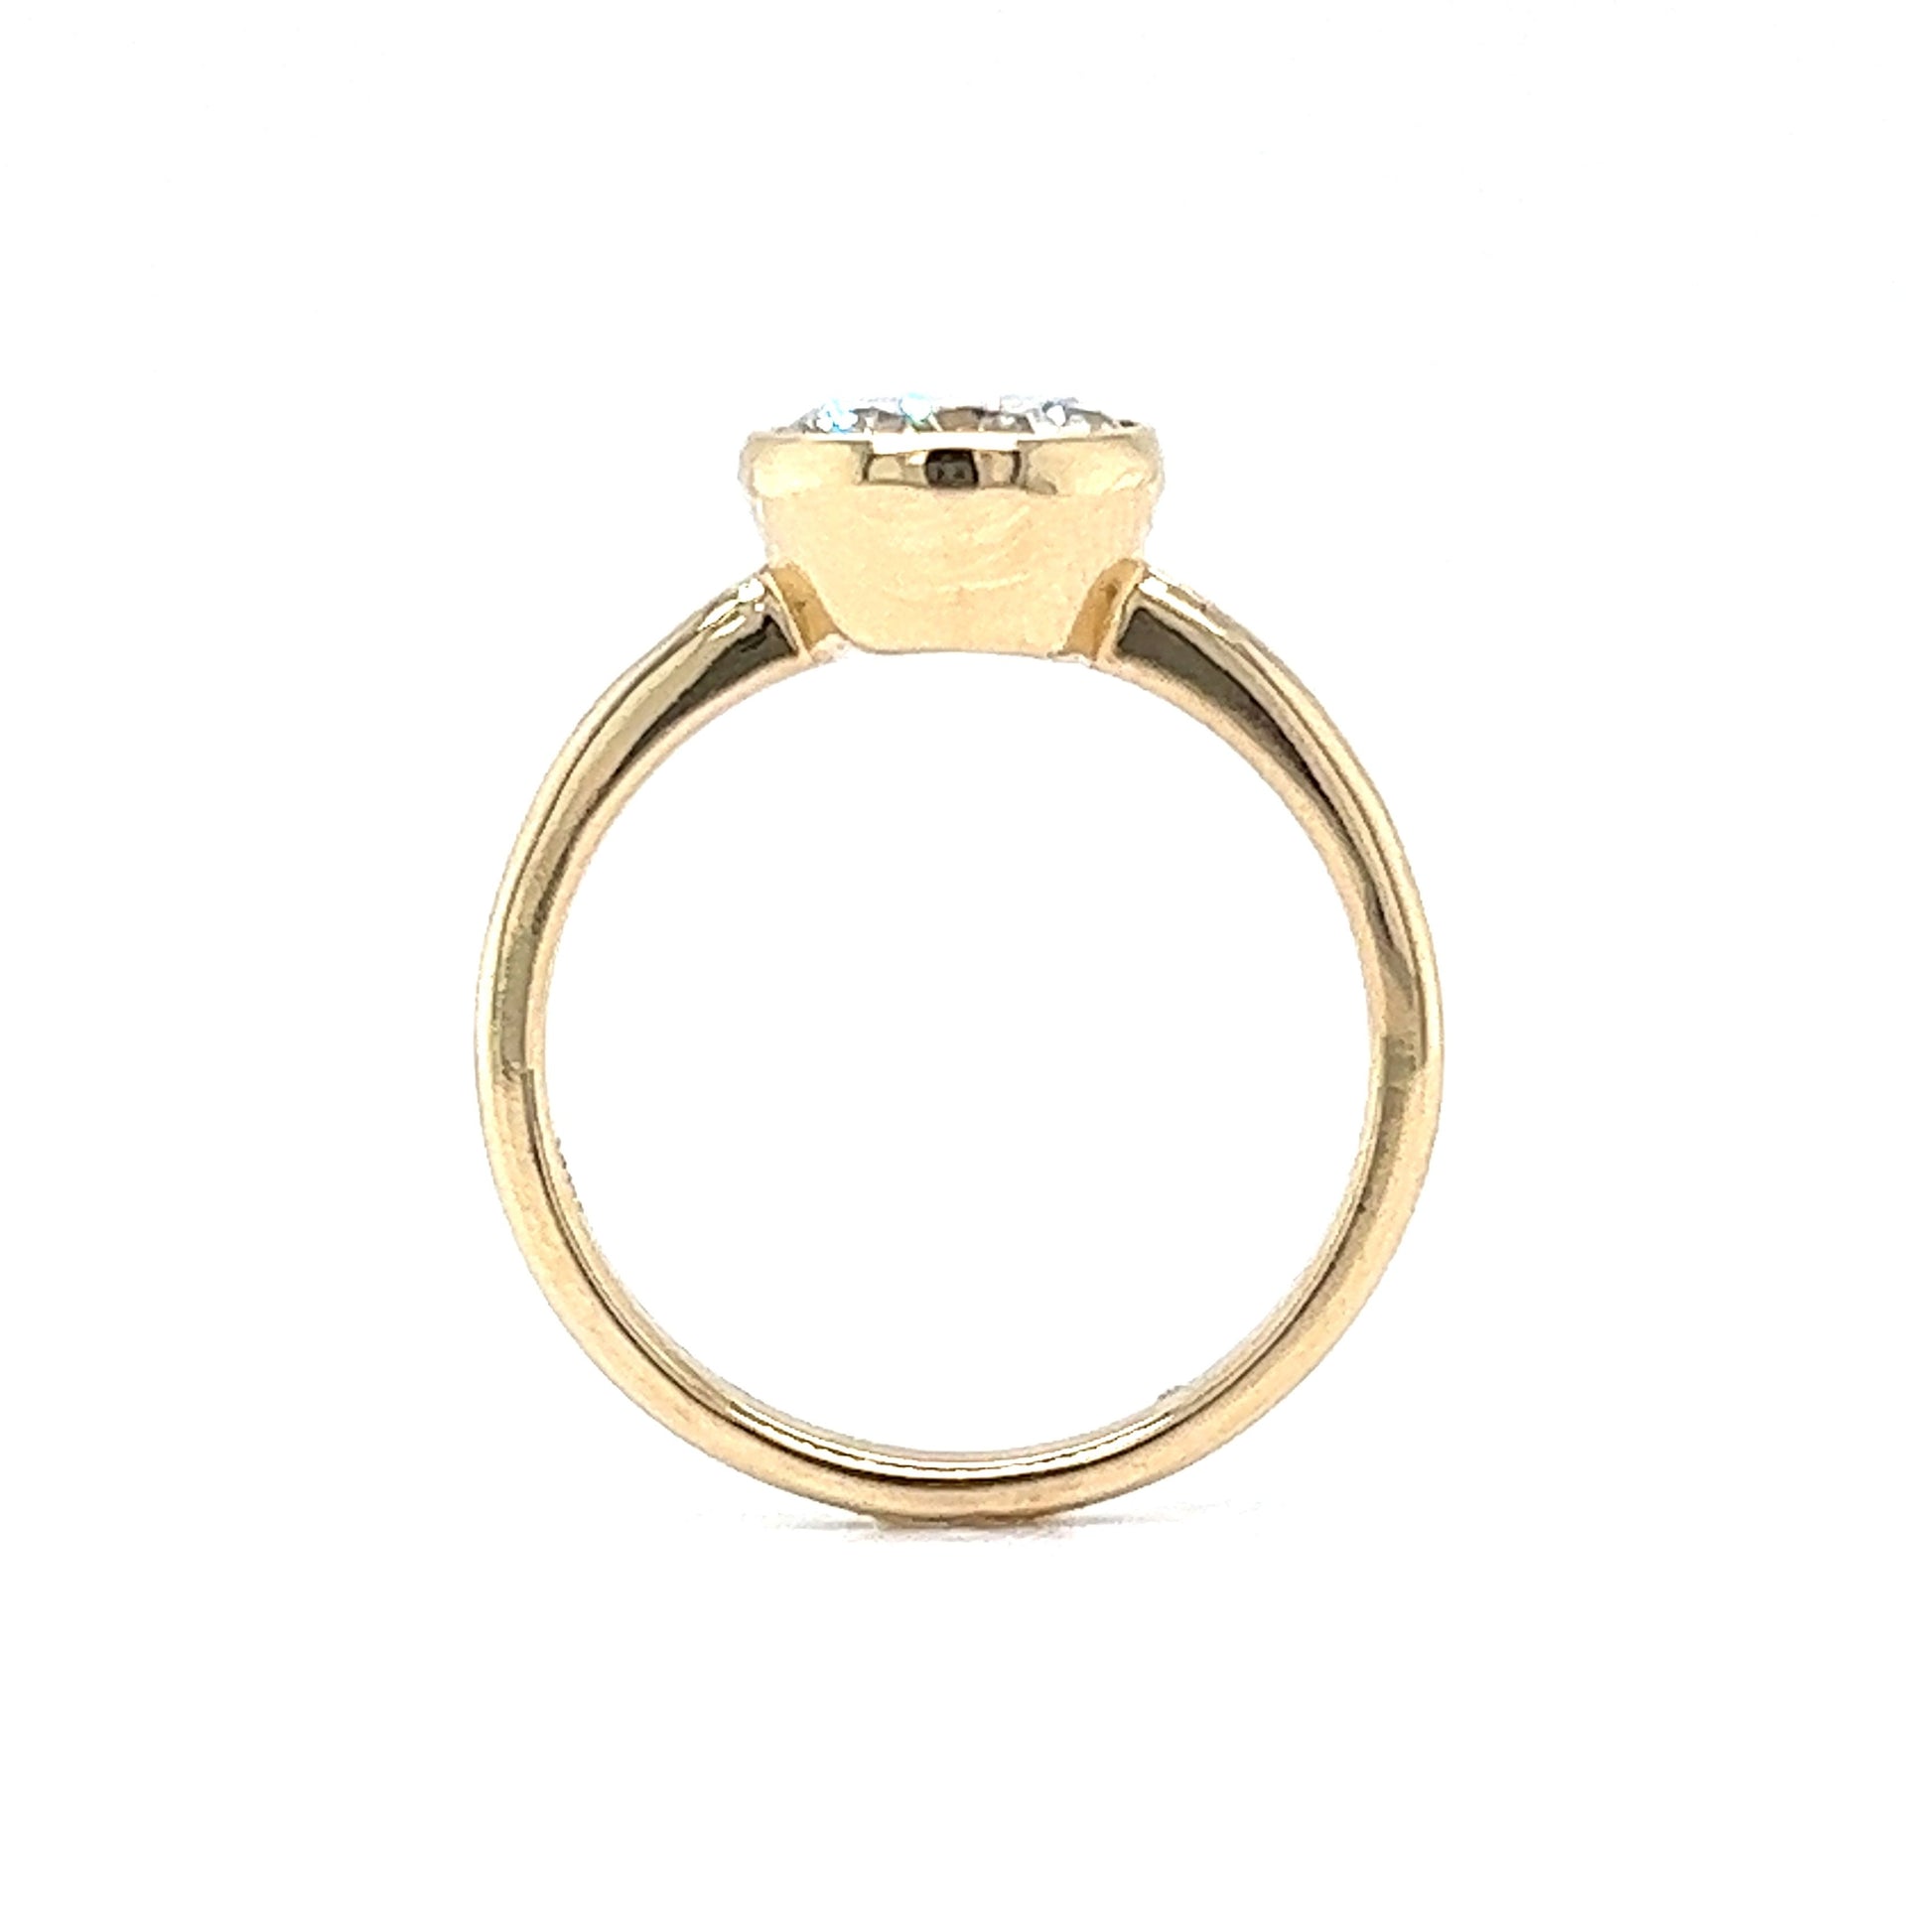 1.71 Round Brilliant Diamond Engagement Ring in 14k Yellow Gold